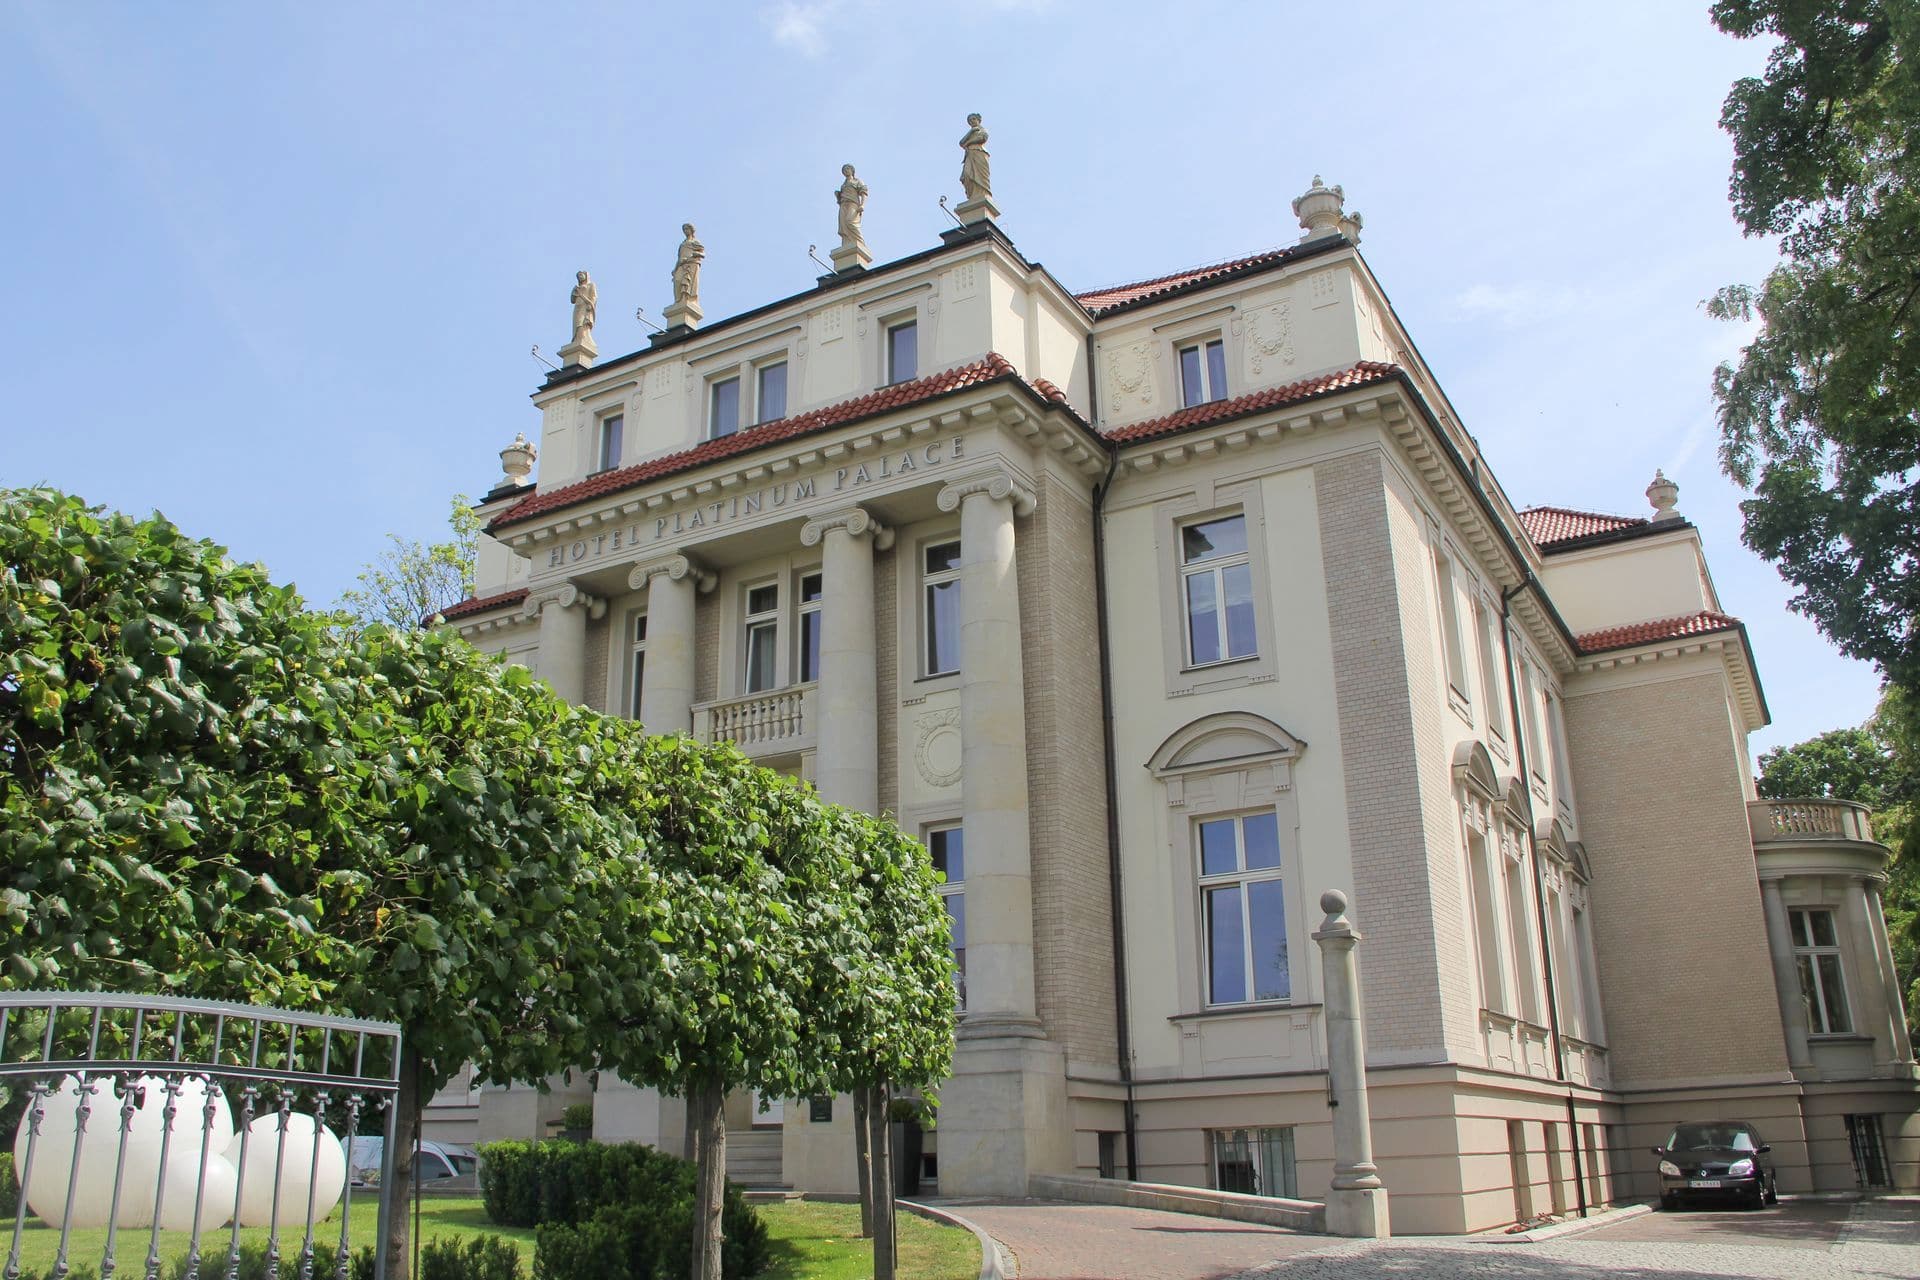 Platinum Palace Breslau